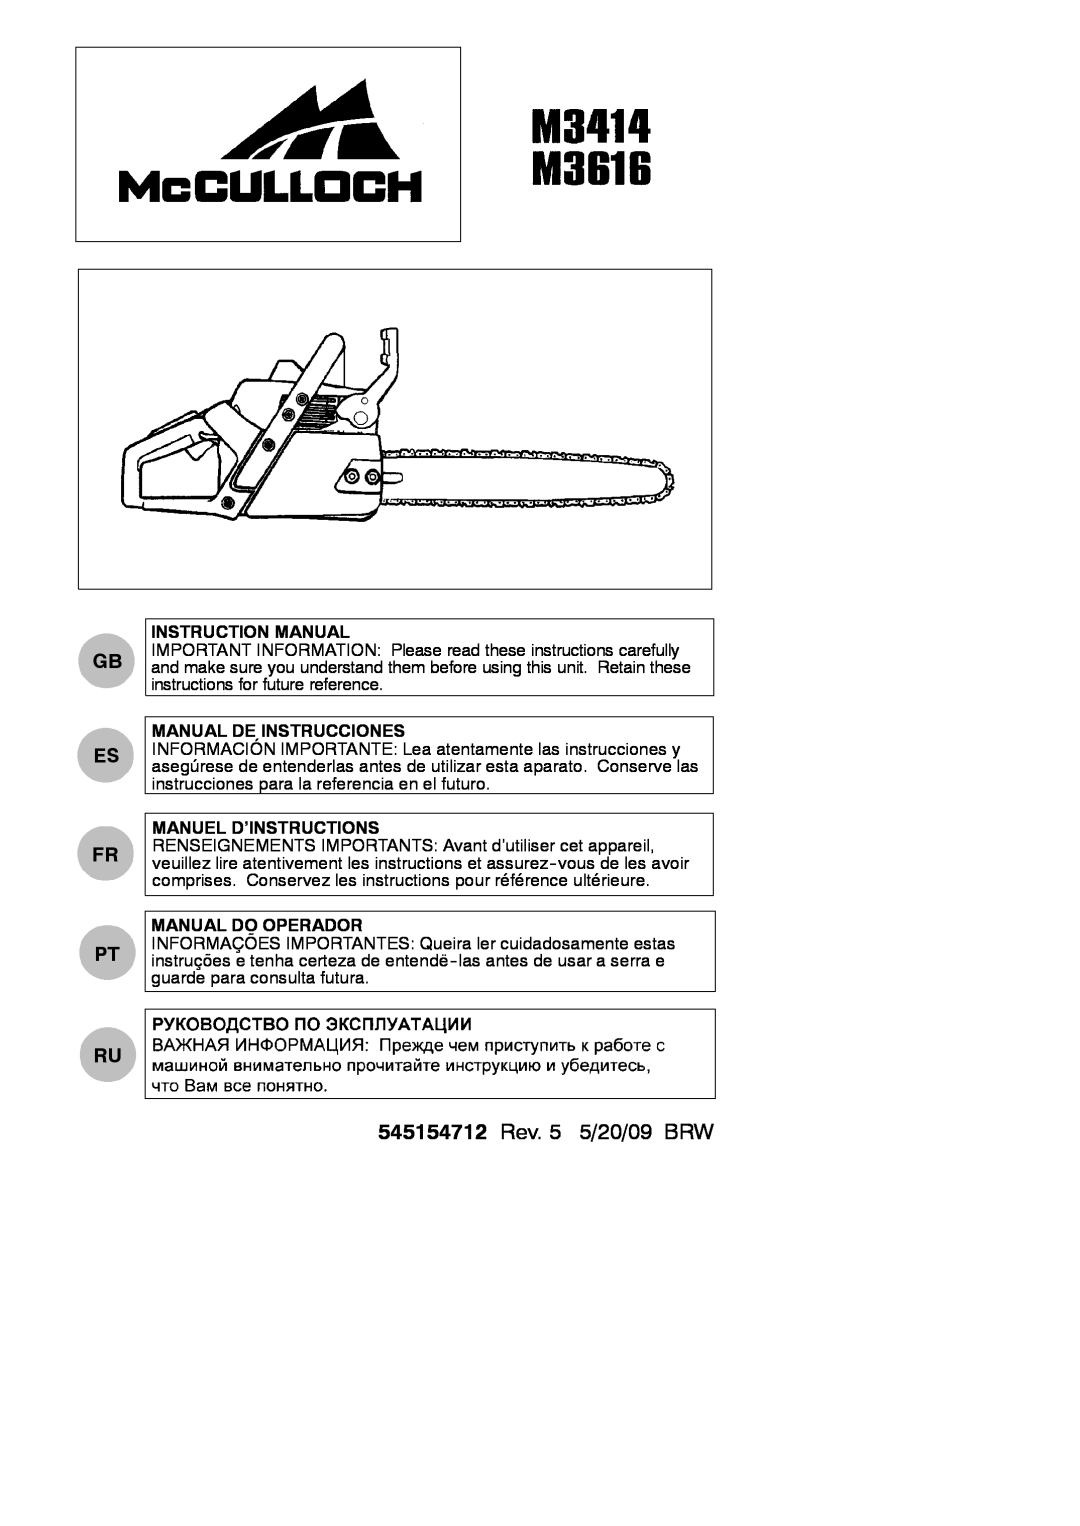 McCulloch M3616 instruction manual Gb Es Fr Pt Ru, Manual De Instrucciones, Manuel D’Instructions, Manual Do Operador 